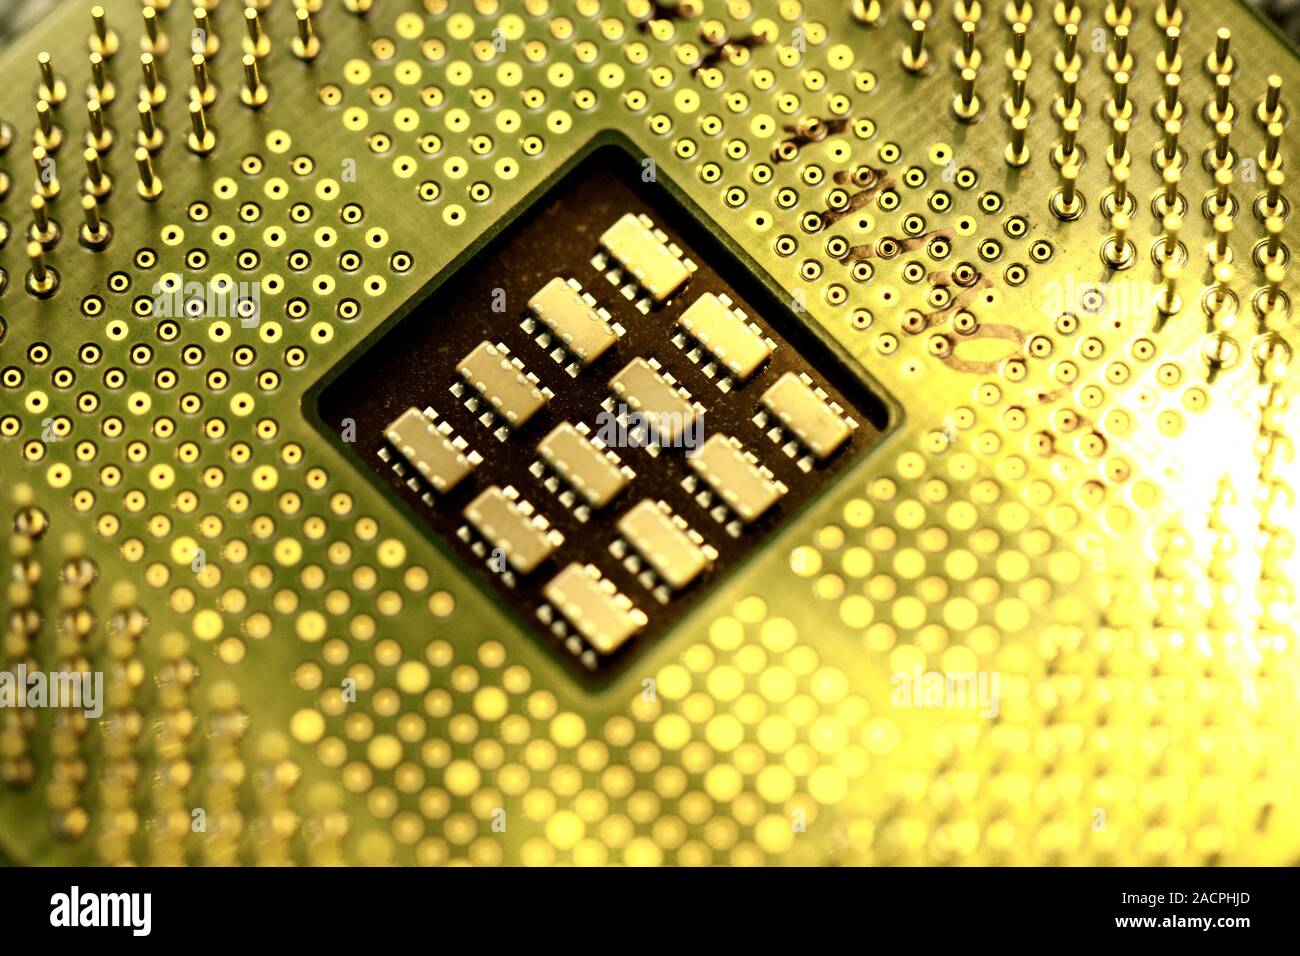 computer microprocessor Stock Photo